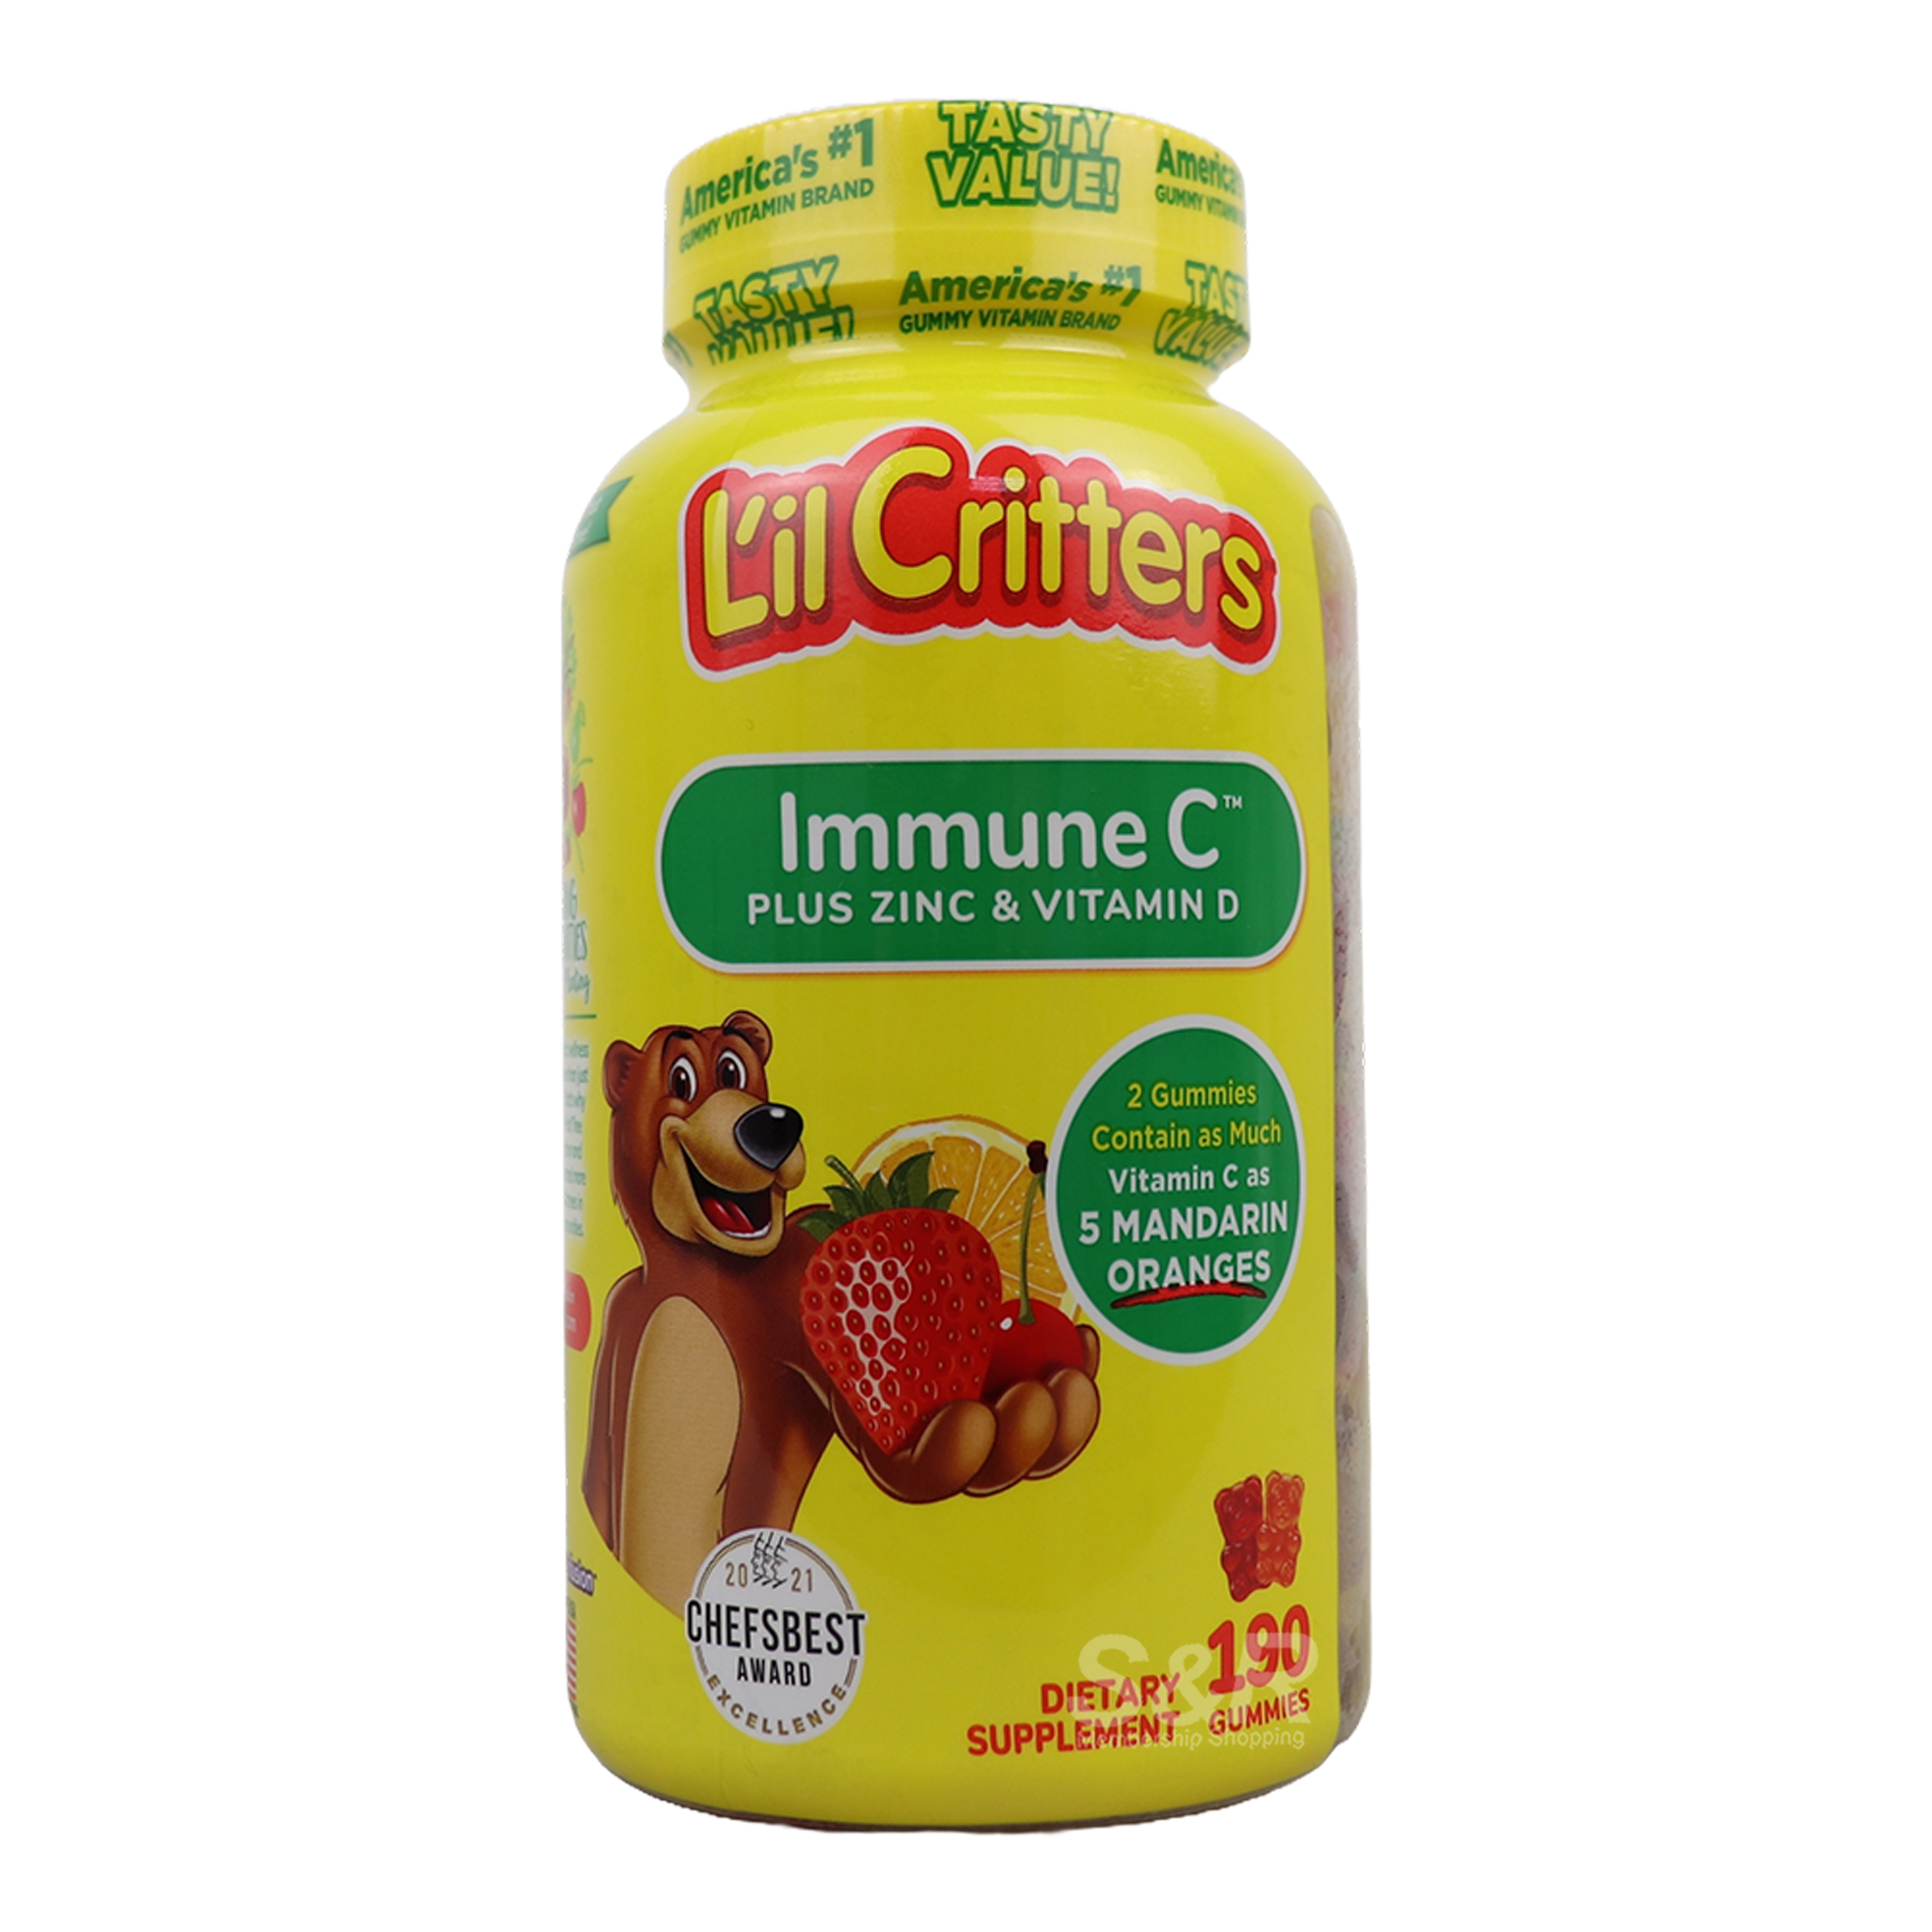 L'il Critters Immune C Plus Zinc and Vitamin D Gummy Bears Dietary Supplement 190pcs